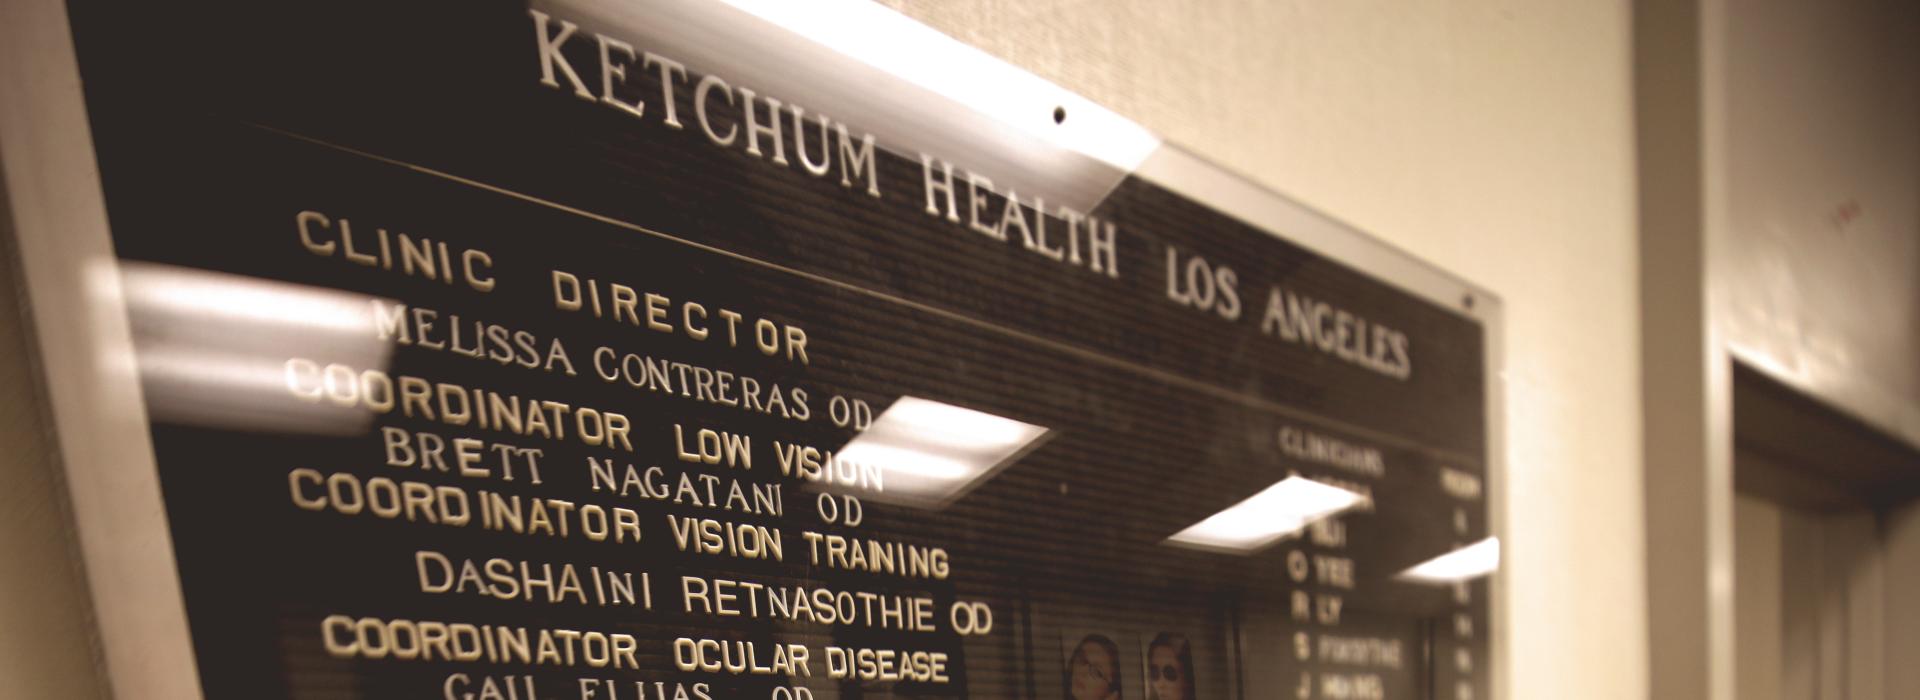 Ketchum Health Los Angeles